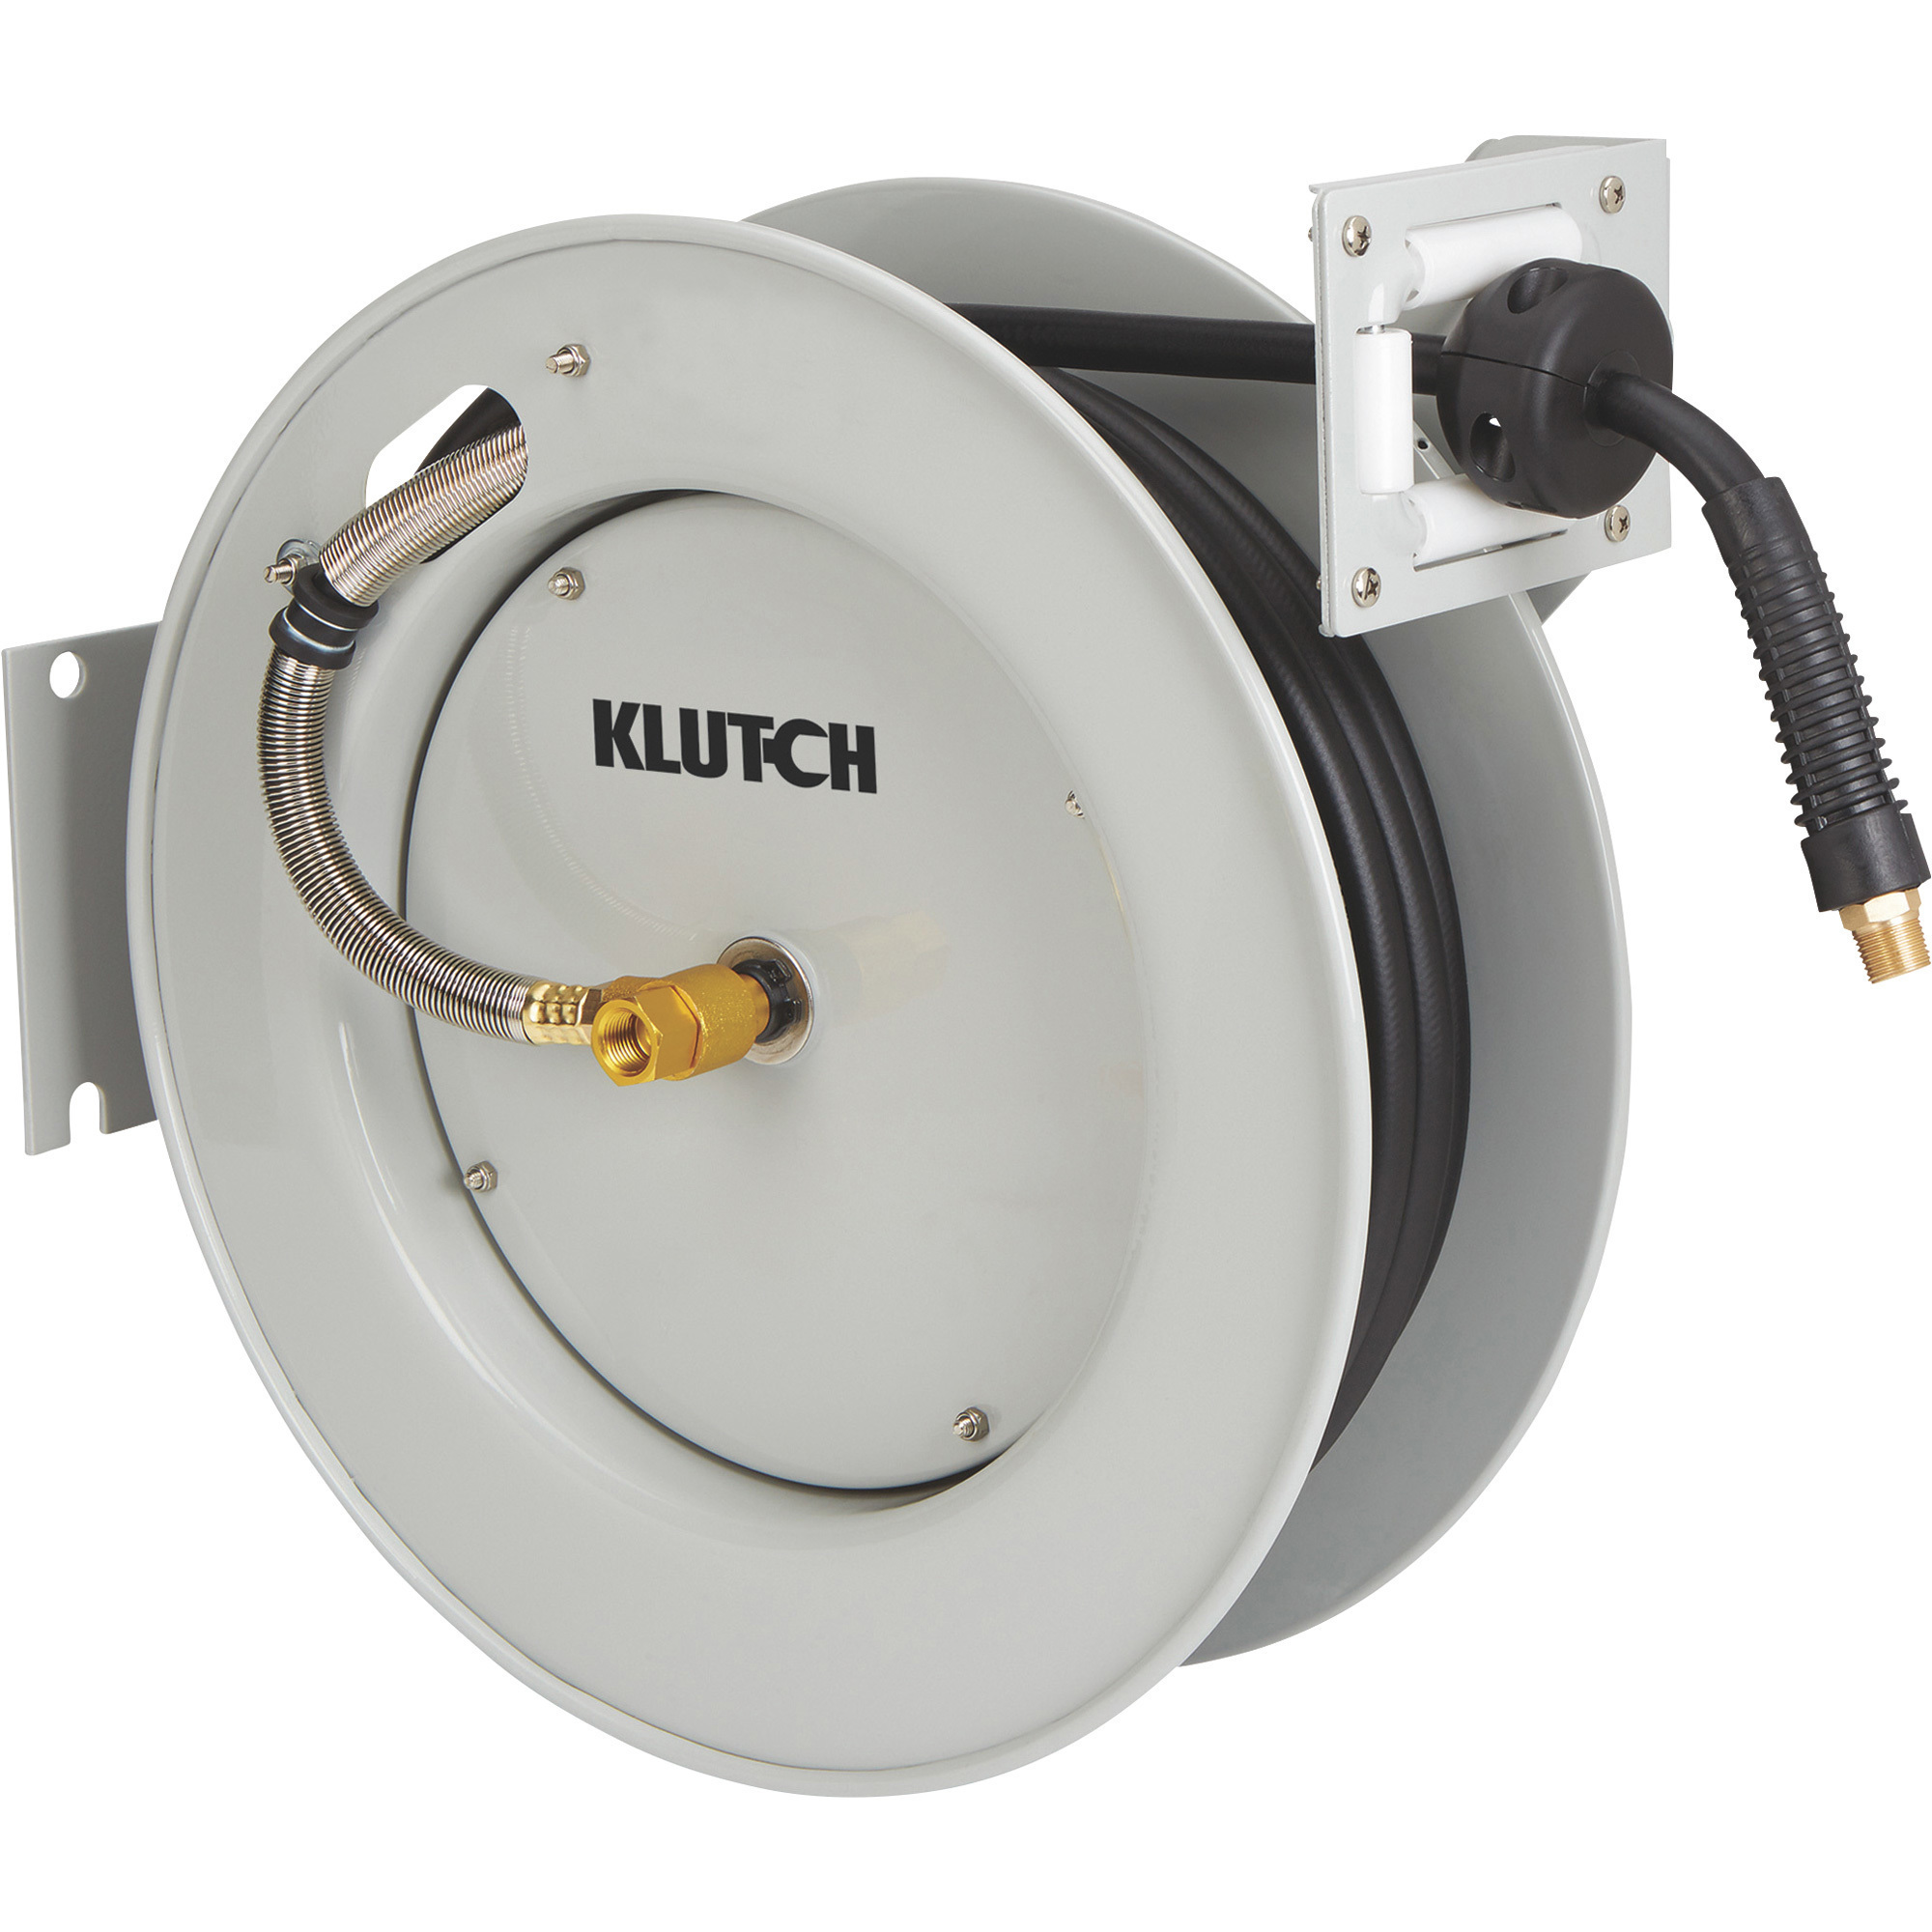 Klutch Auto-Rewind Air Hose Reel, with 3/8Inch x 50ft. Hybrid Polymer Hose, 300 Max. PSI